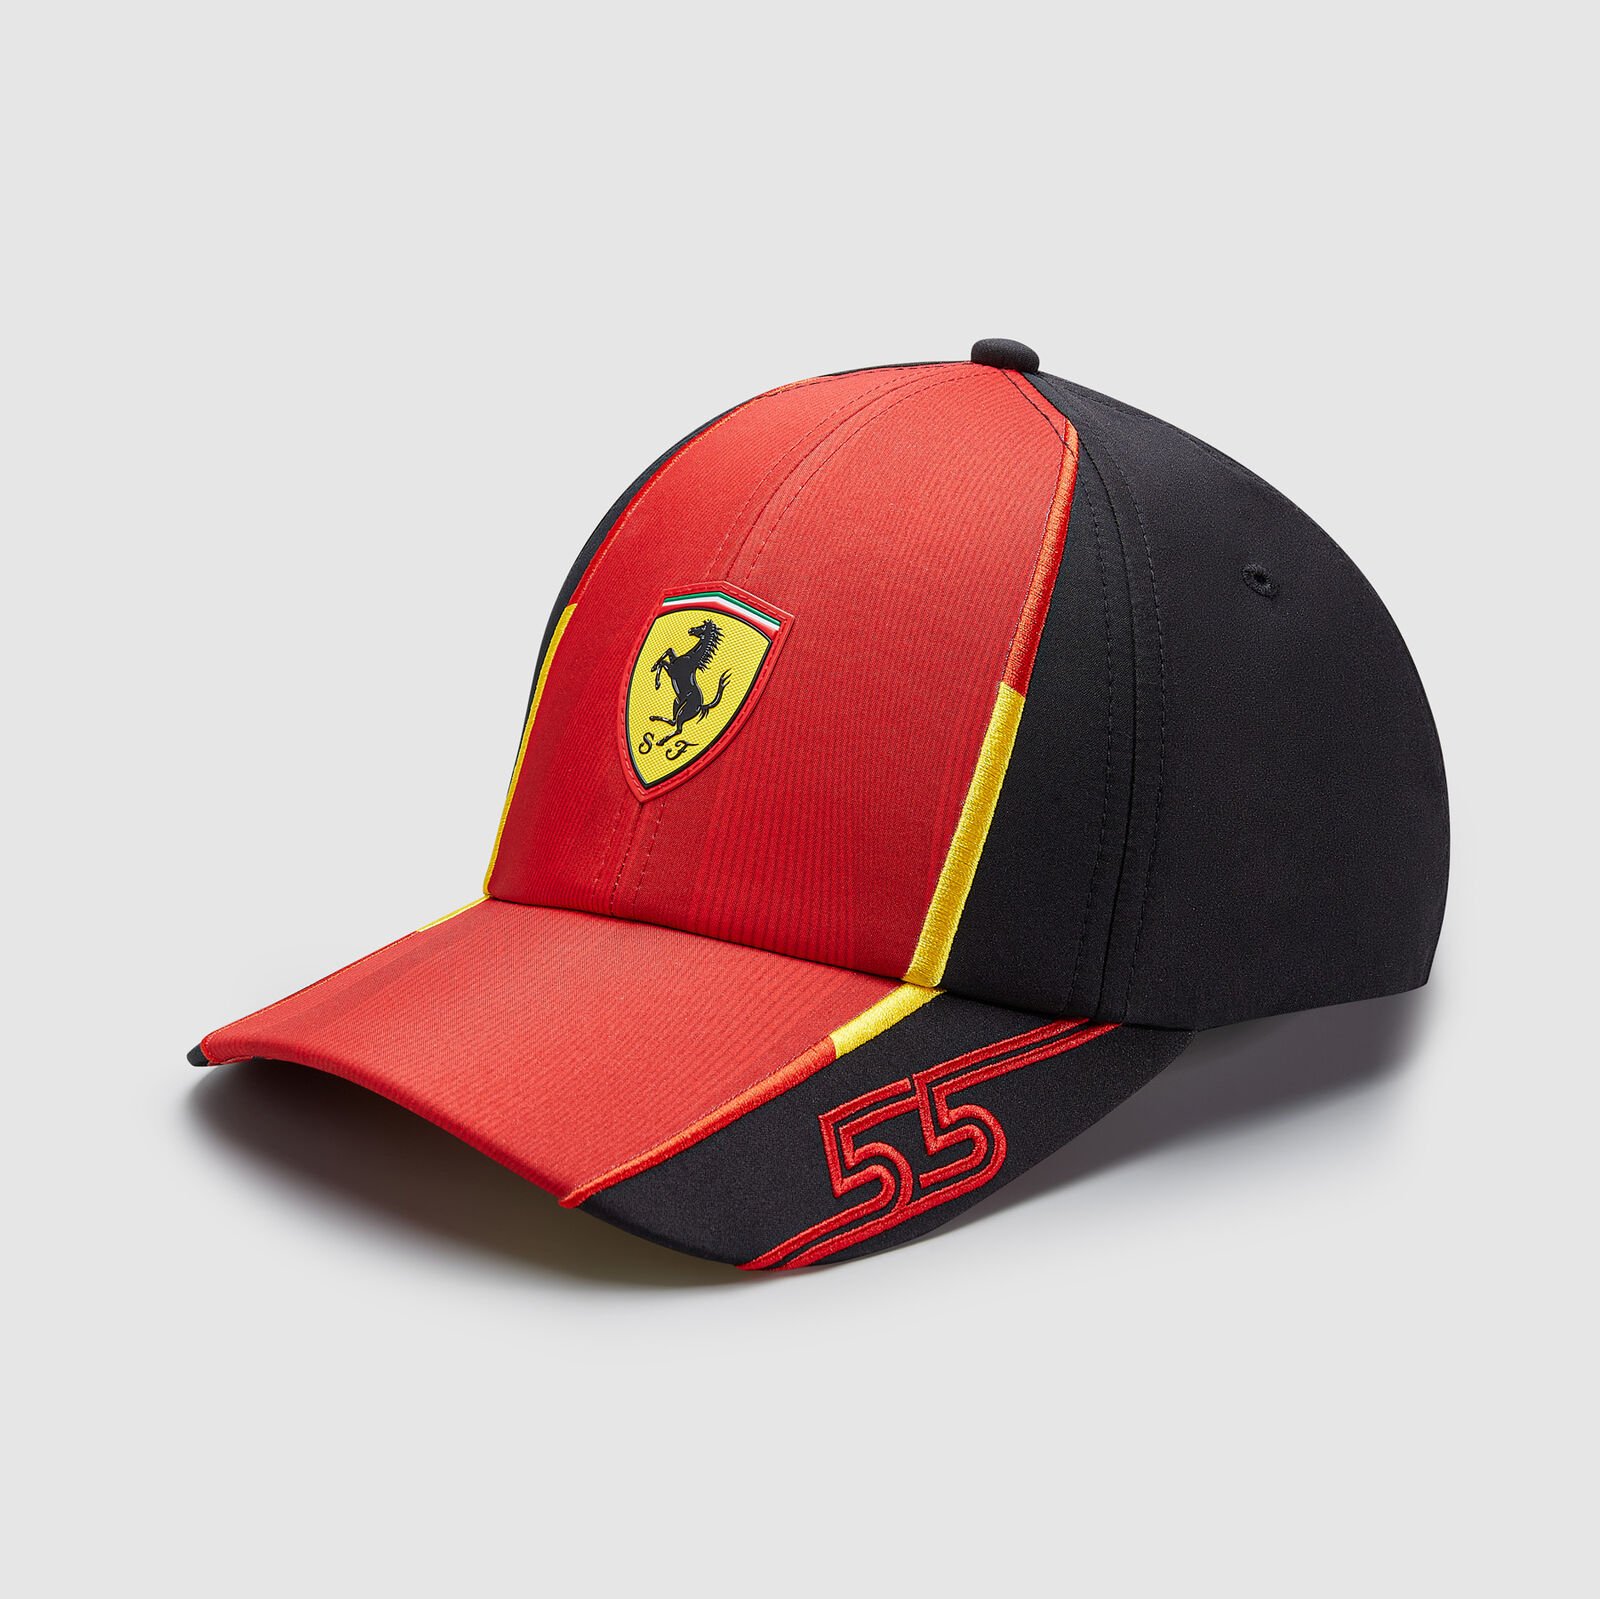 2023 Carlos Sainz Driver Cap - Scuderia Ferrari F1 | Fuel For Fans